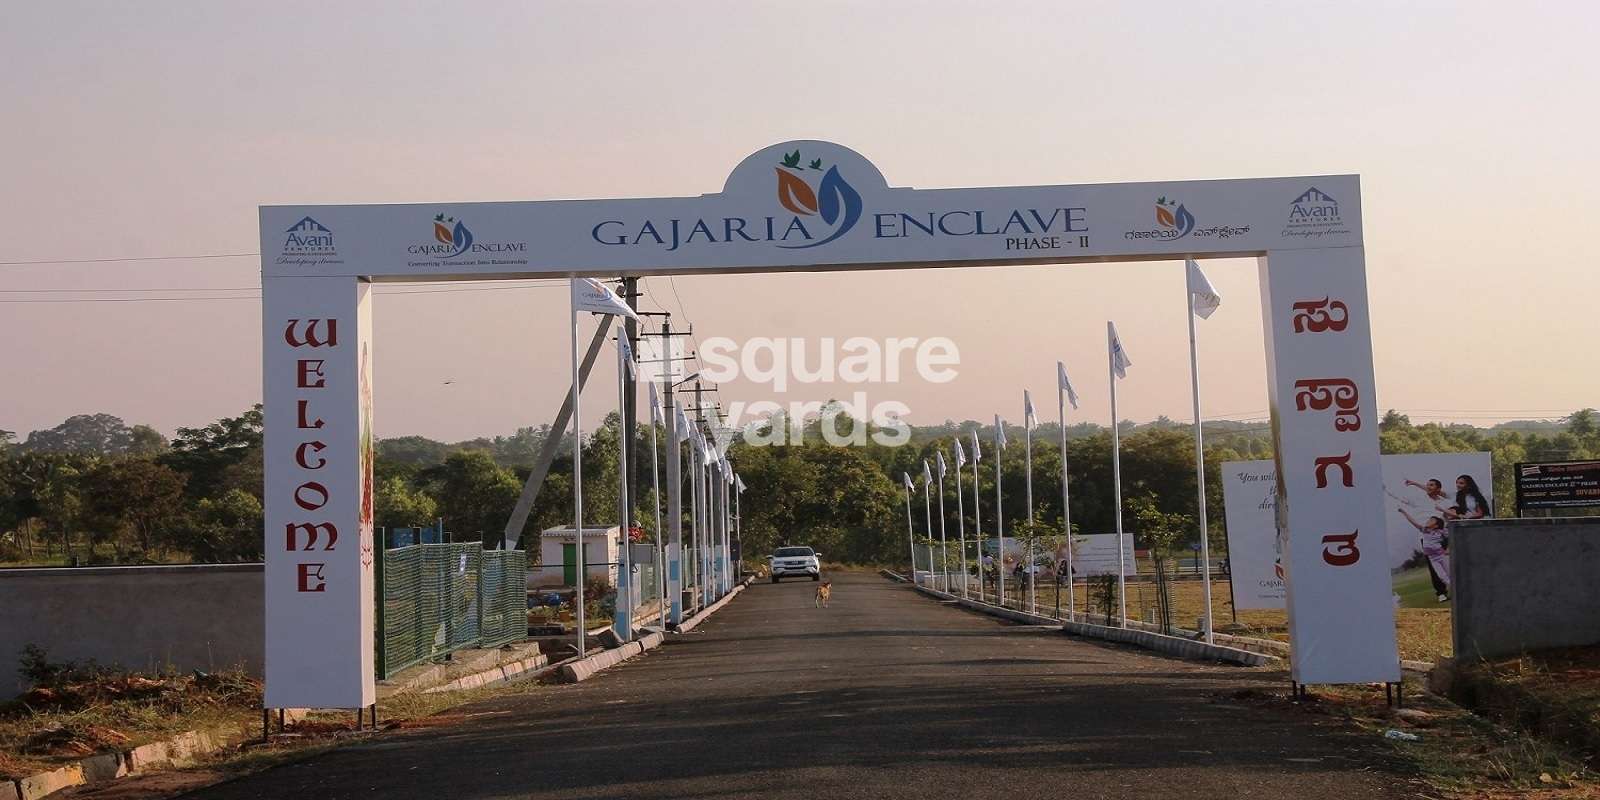 Avani Gajariya Enclave Cover Image